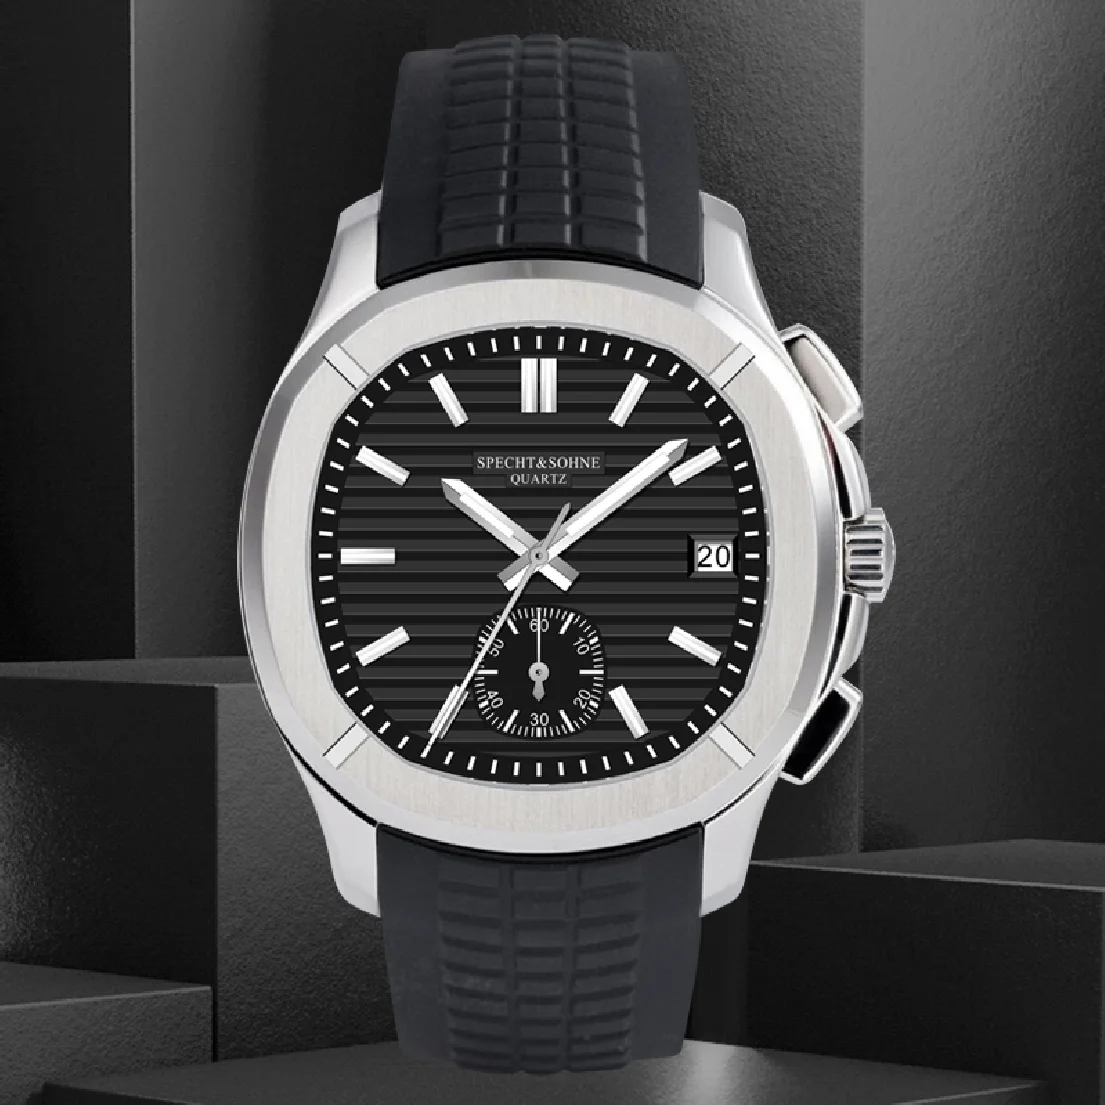 

Relogio Masculino Fashion Reloj Top Luxury Brand Specht&Sohne Japan Chronograph Quartz Rubber Sport Wristwatch For Men AAA